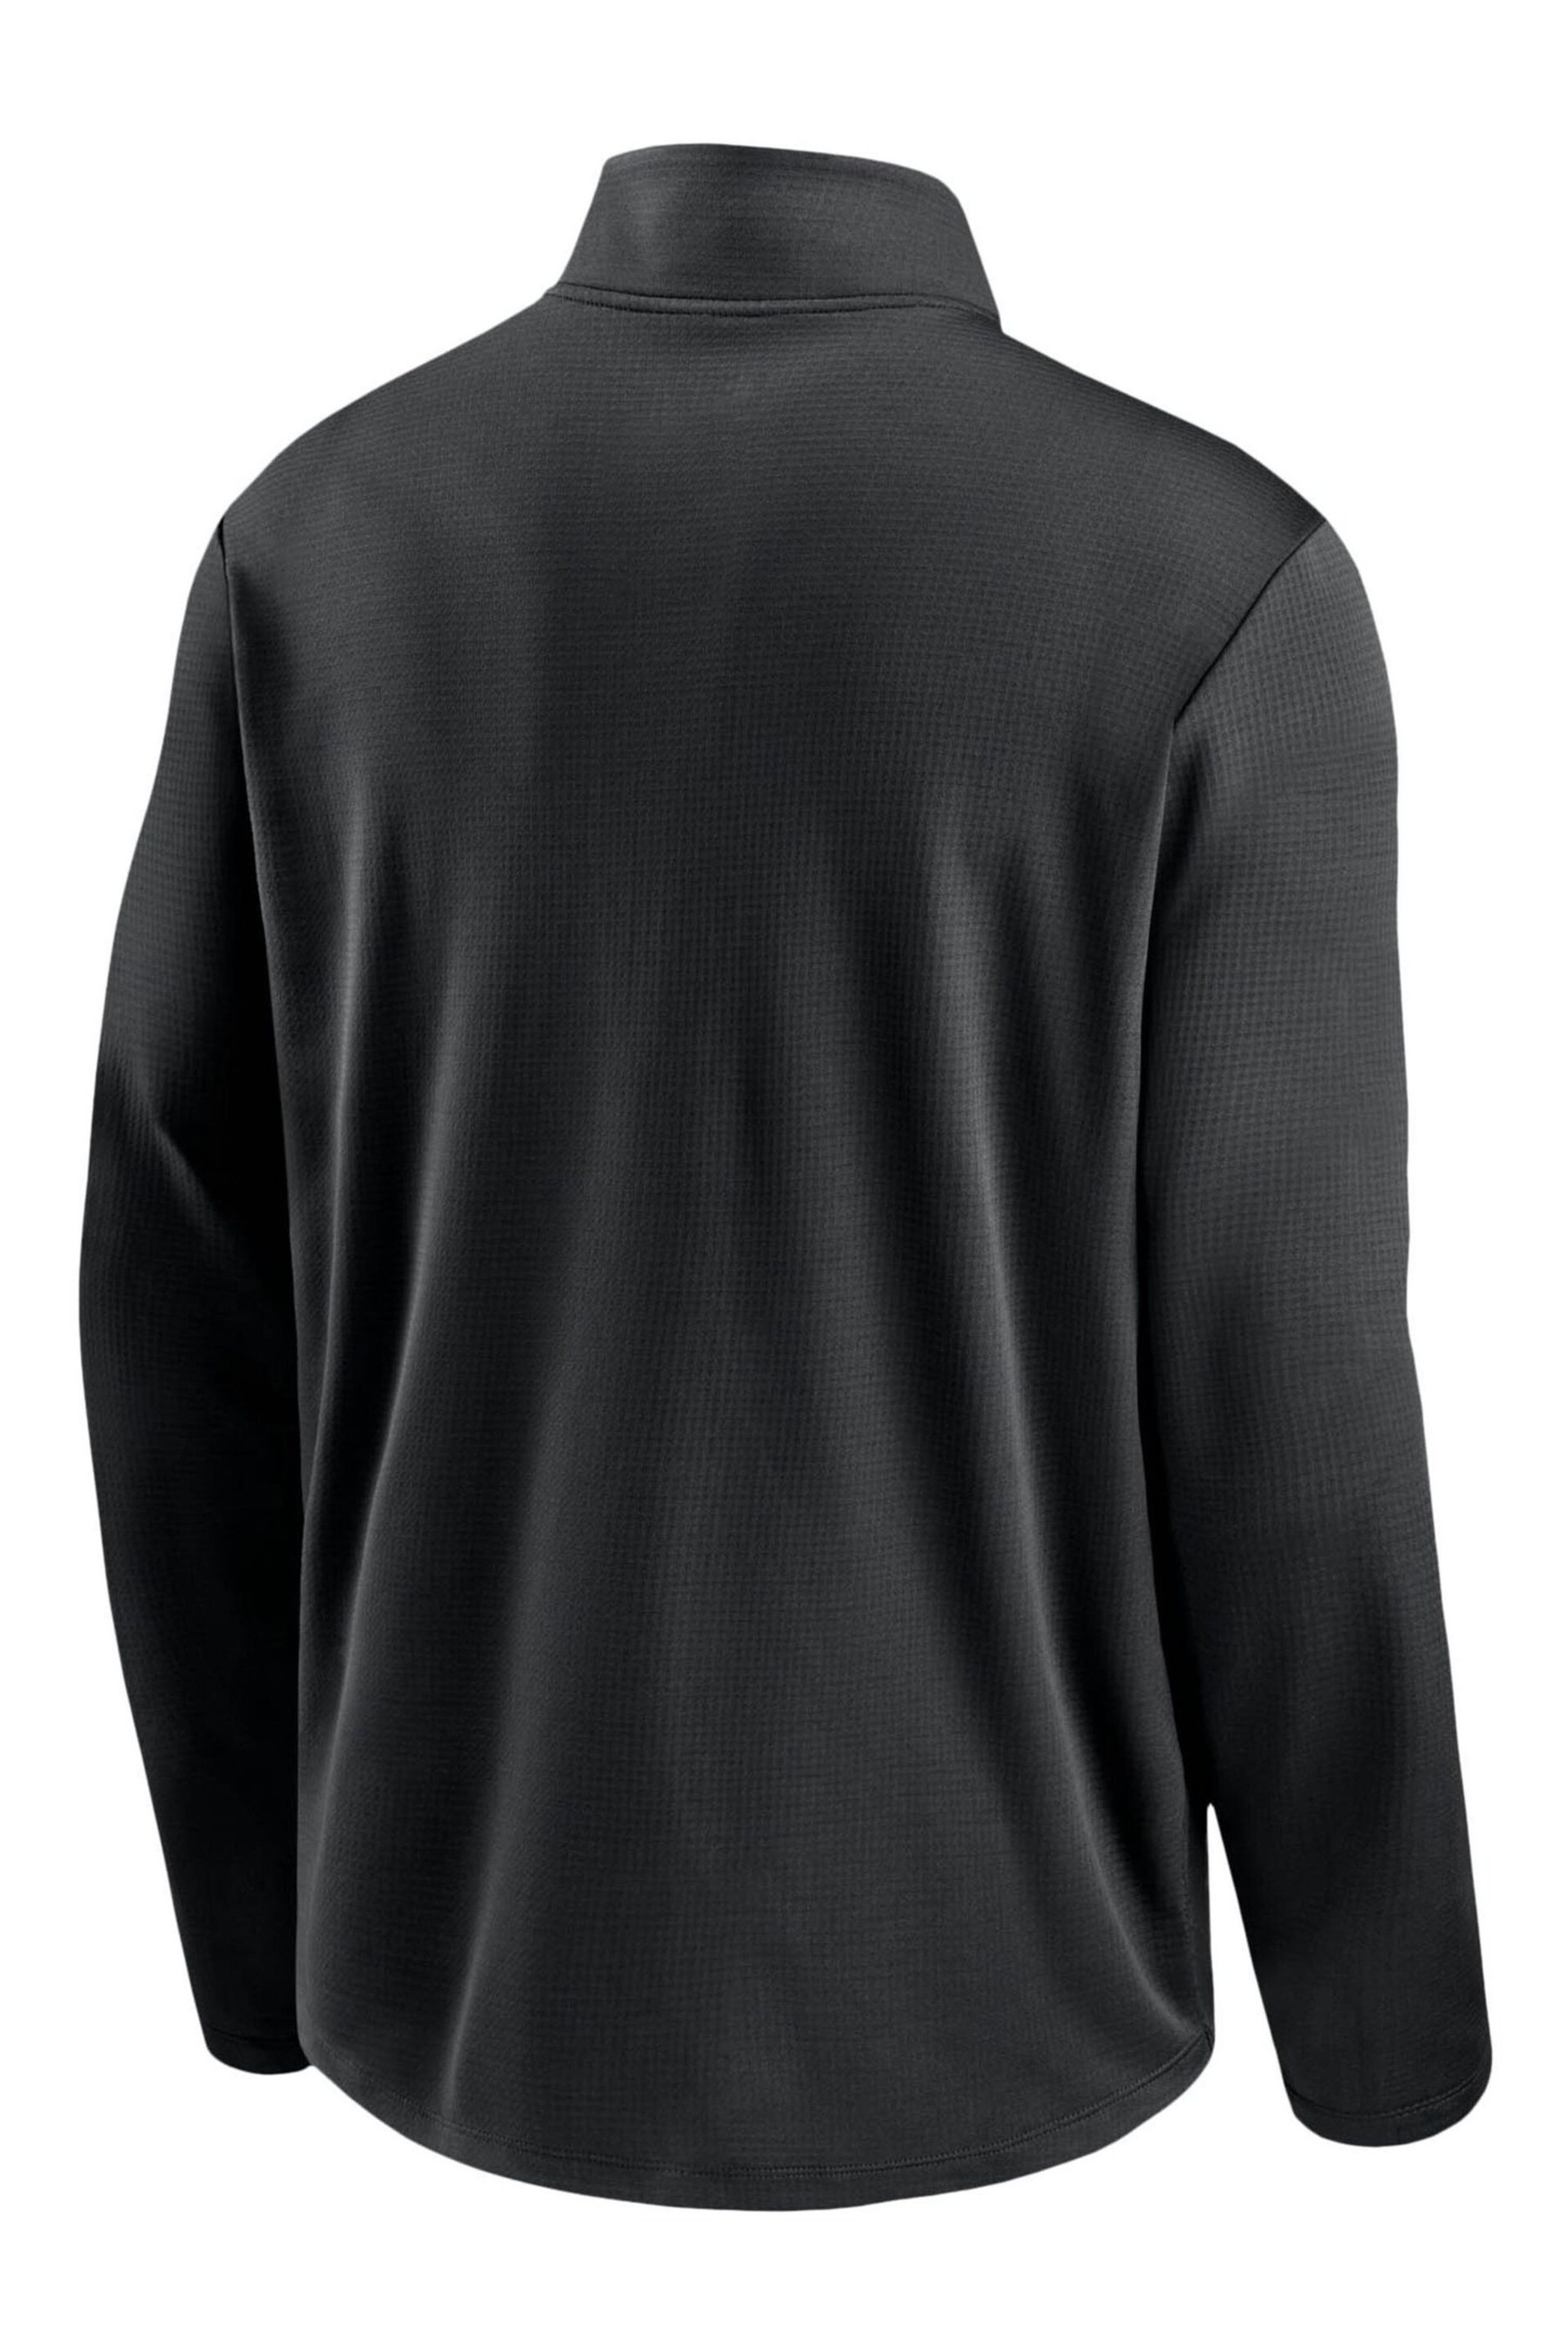 Nike Black NFL Fanatics Las Vegas Raiders Pacer Half Zip Jacket - Image 3 of 3